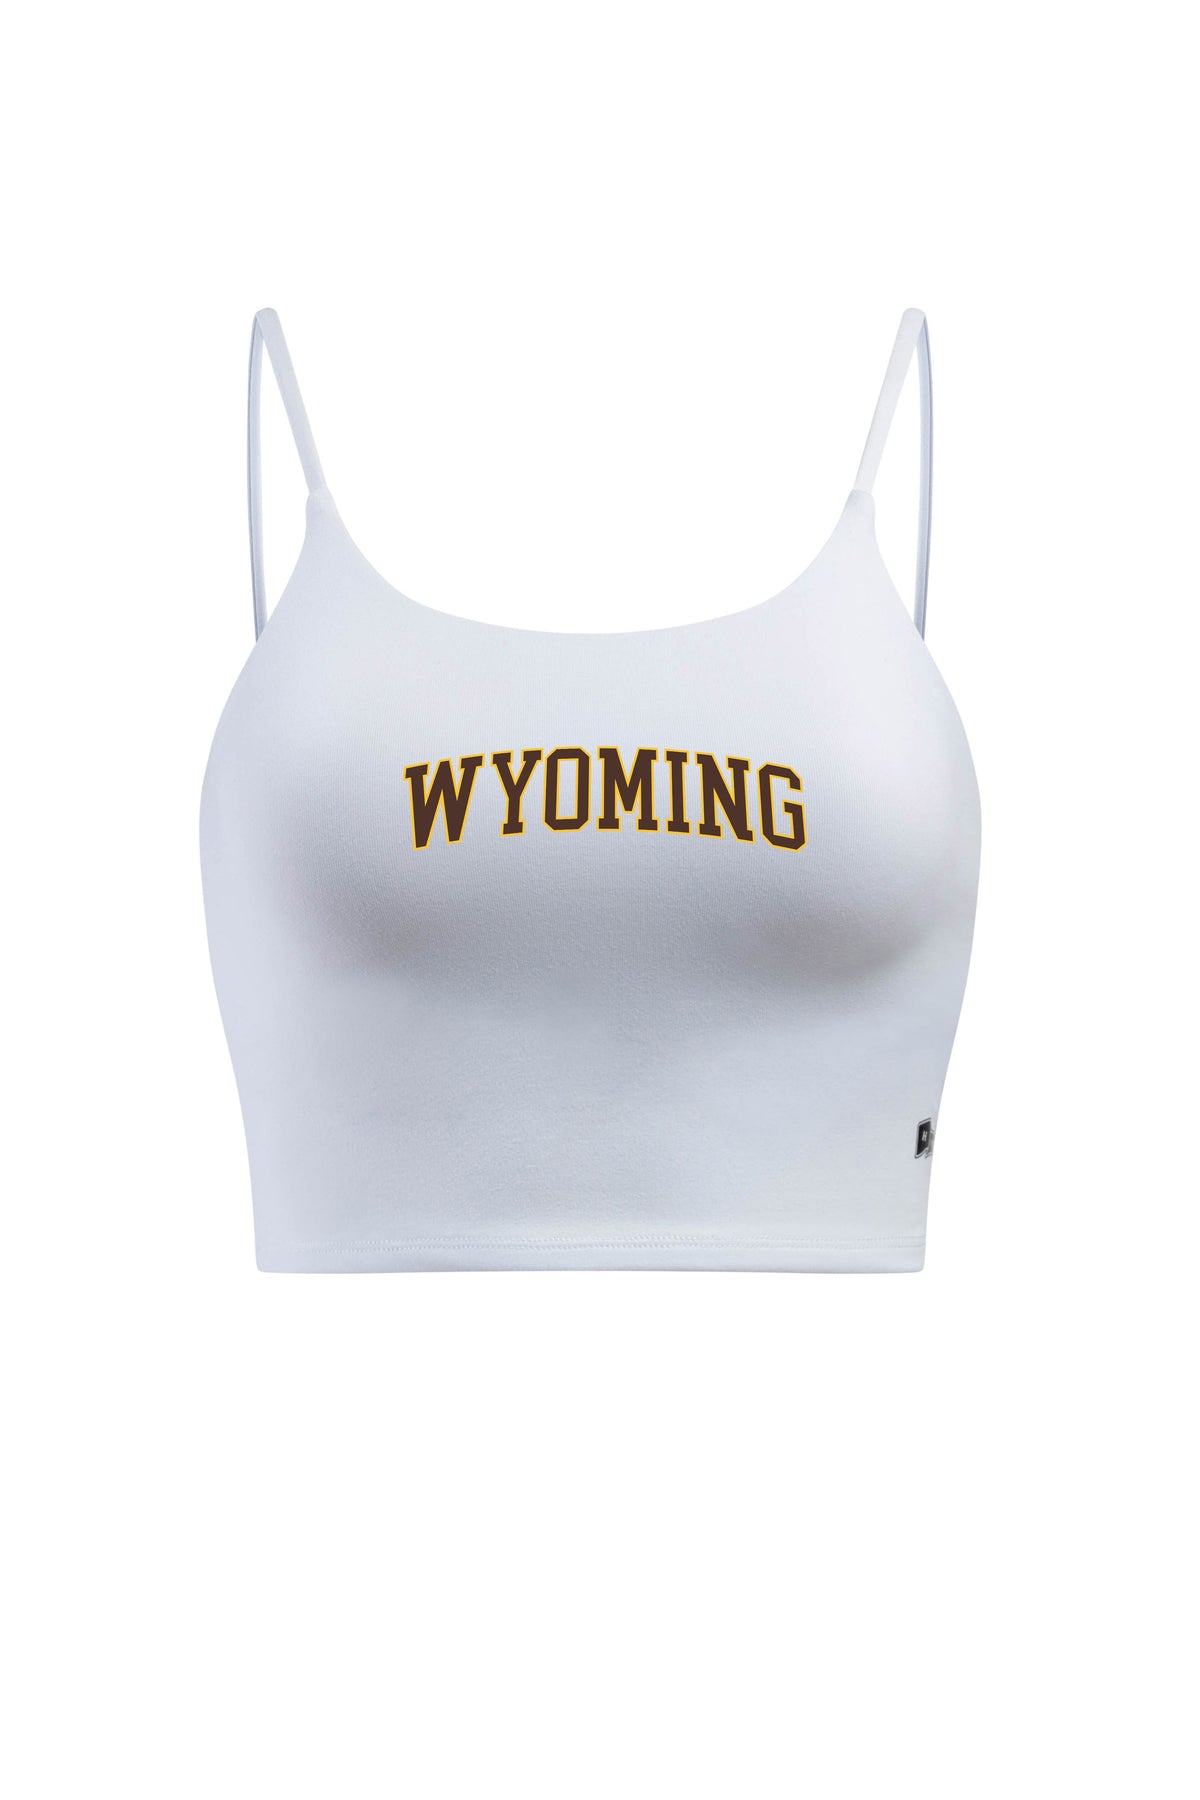 University of Wyoming Bra Tank Top